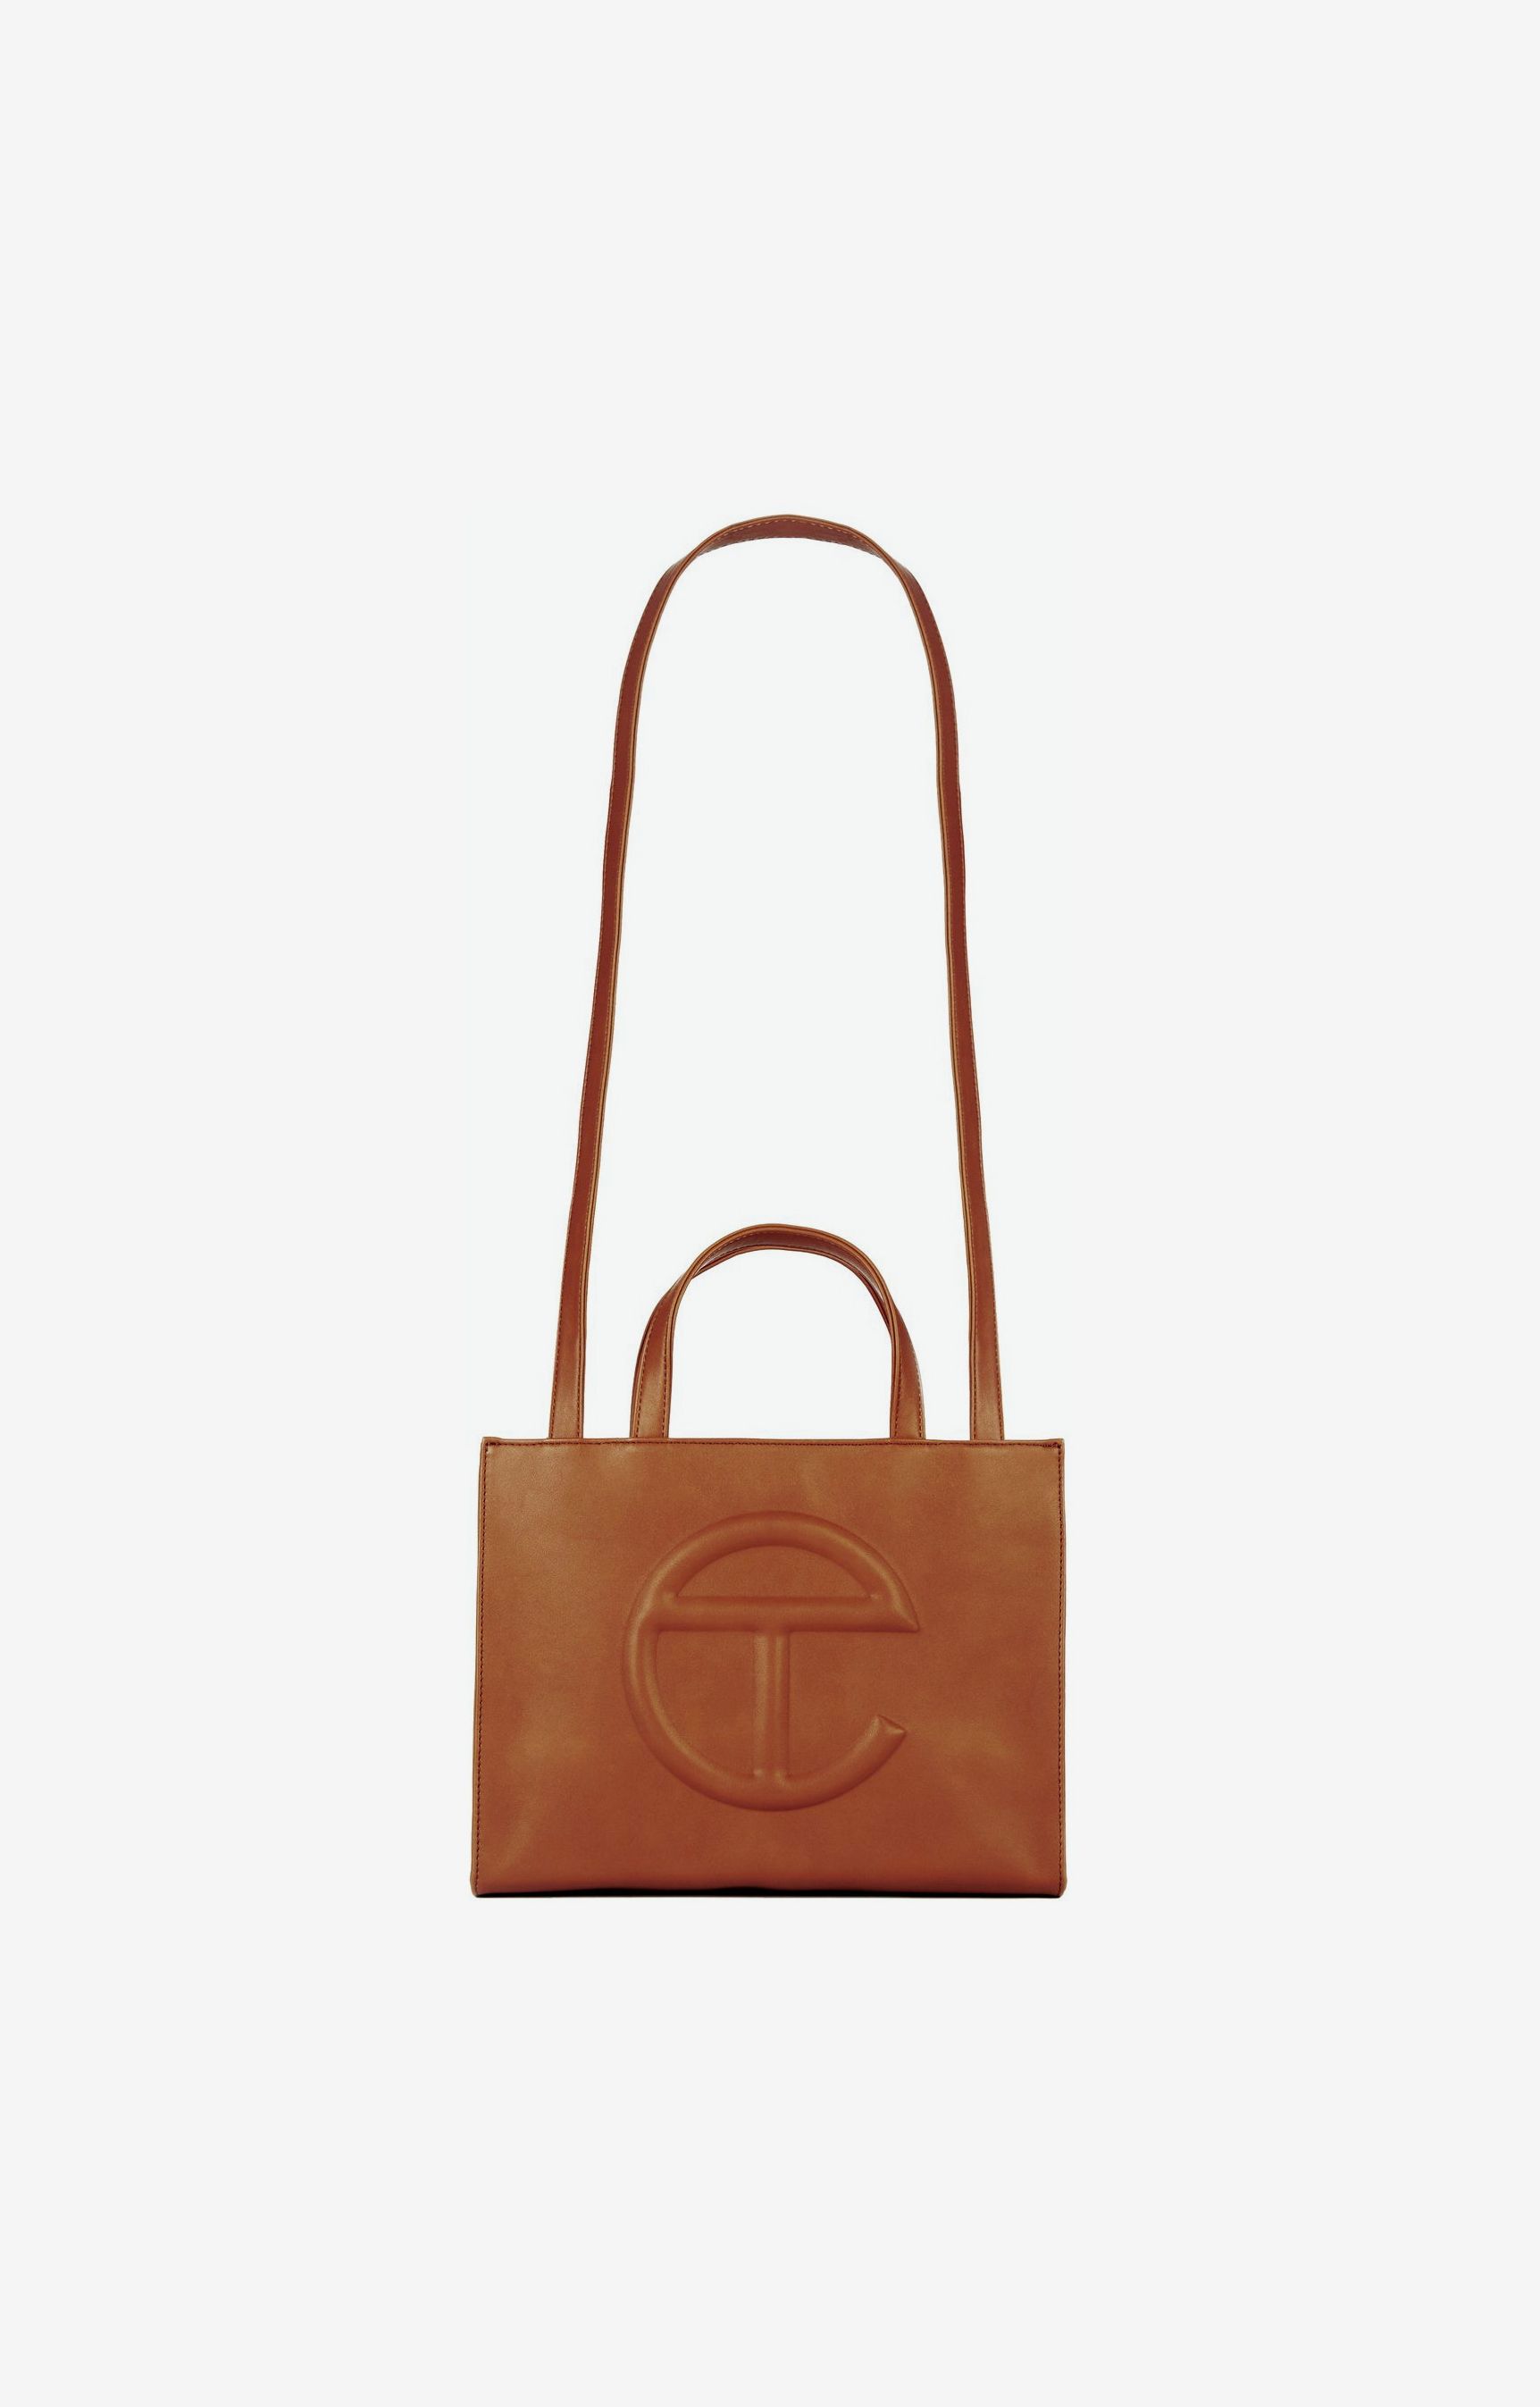 Telfar, a Genius, Made a Clear Shopping Bag for All Your Summer